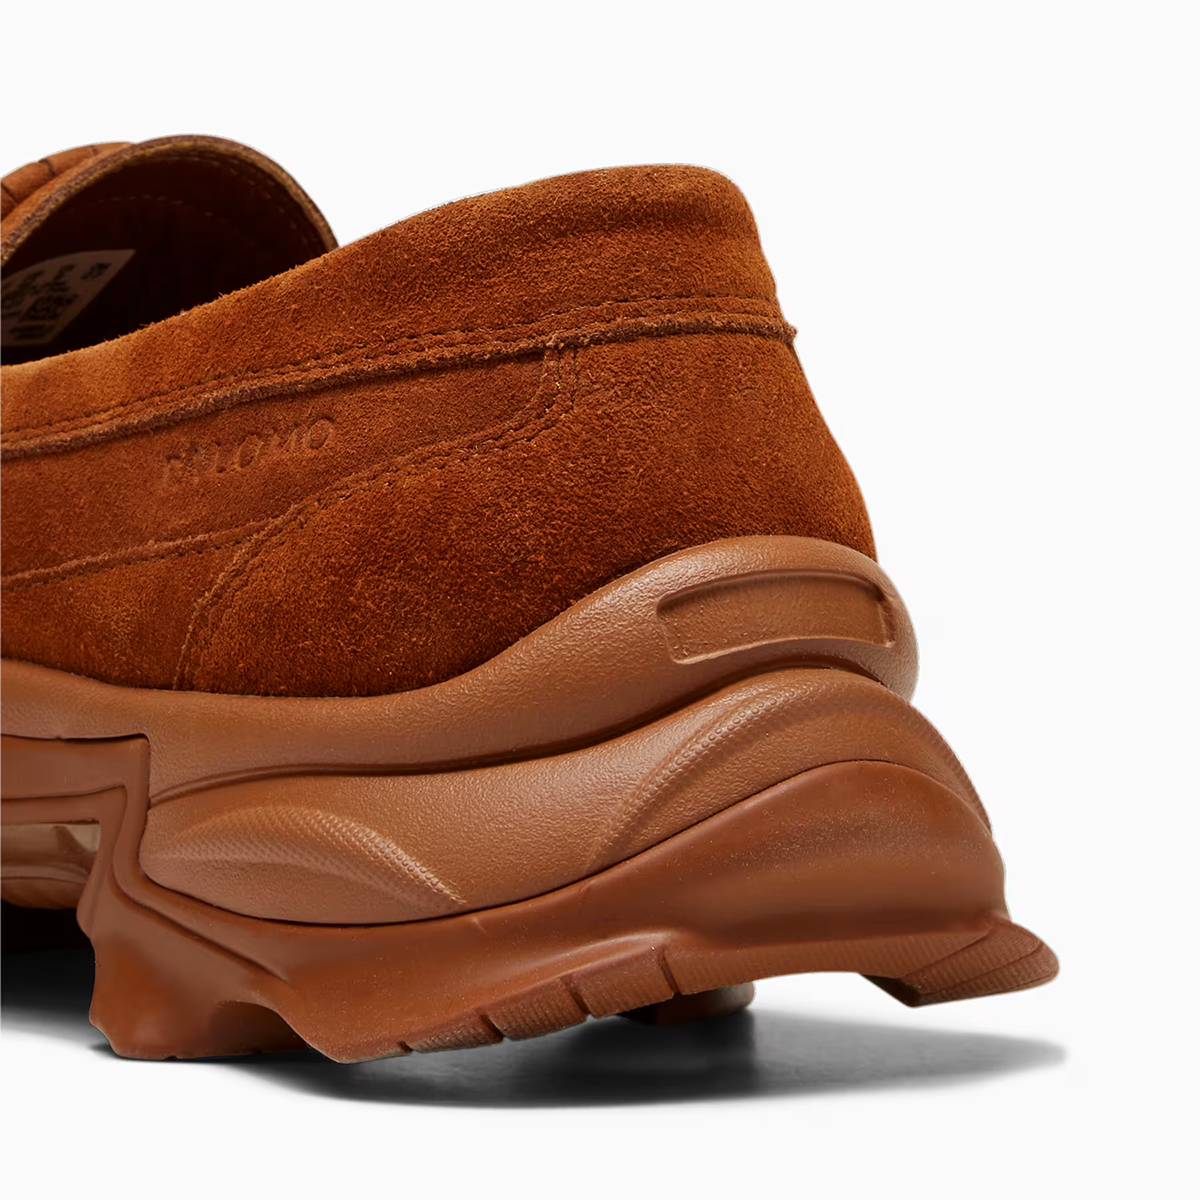 Palomo Puma Nitefox Leather Sneaker Loafer Teak 396816 01 6